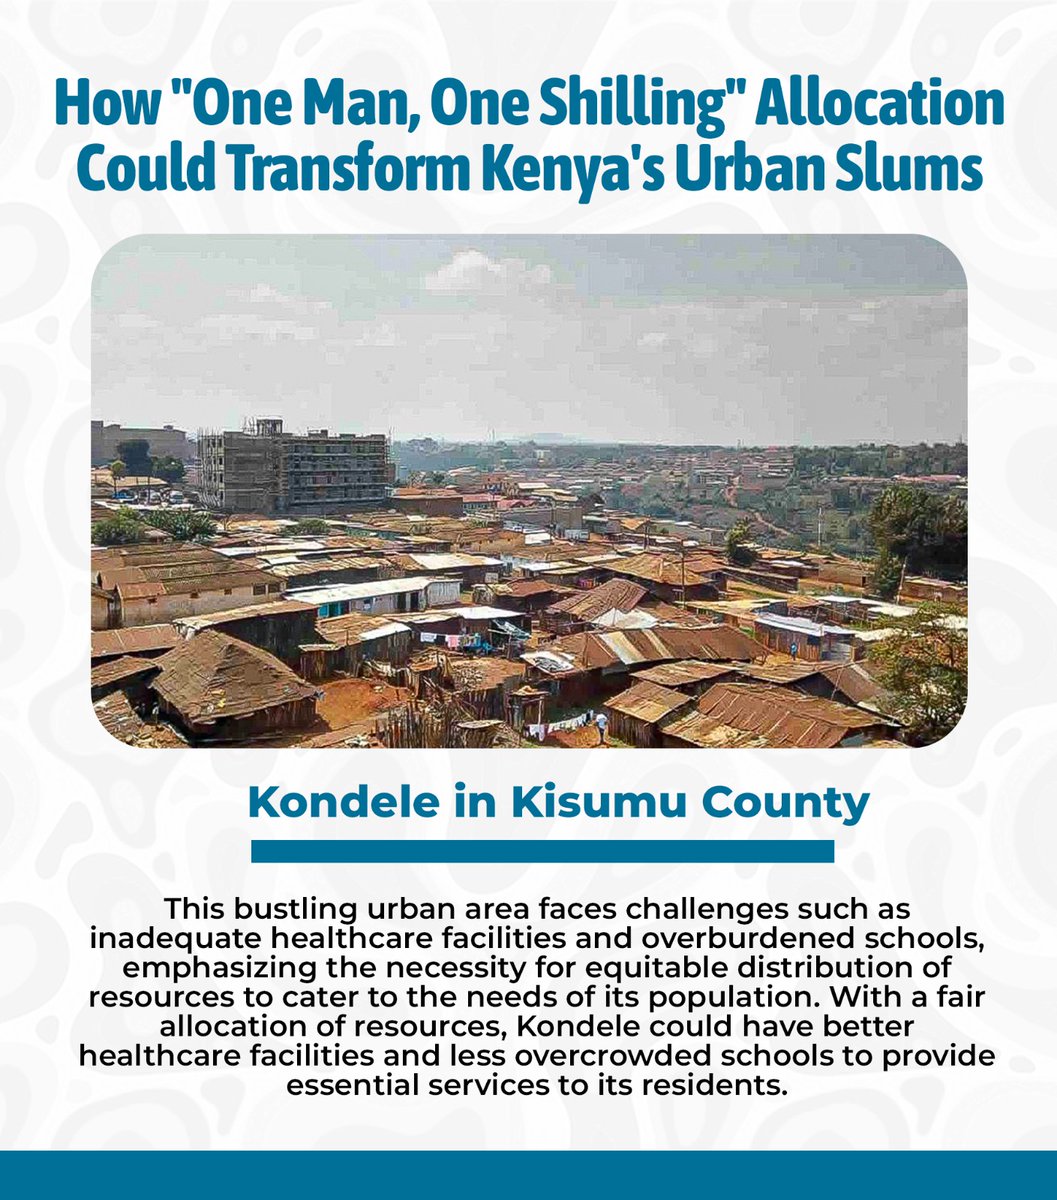 The people of kondele in kisumu also need resources 
#OneManOneVoteOneShilling
#RigathiOnAssignment
Fair resource allocation